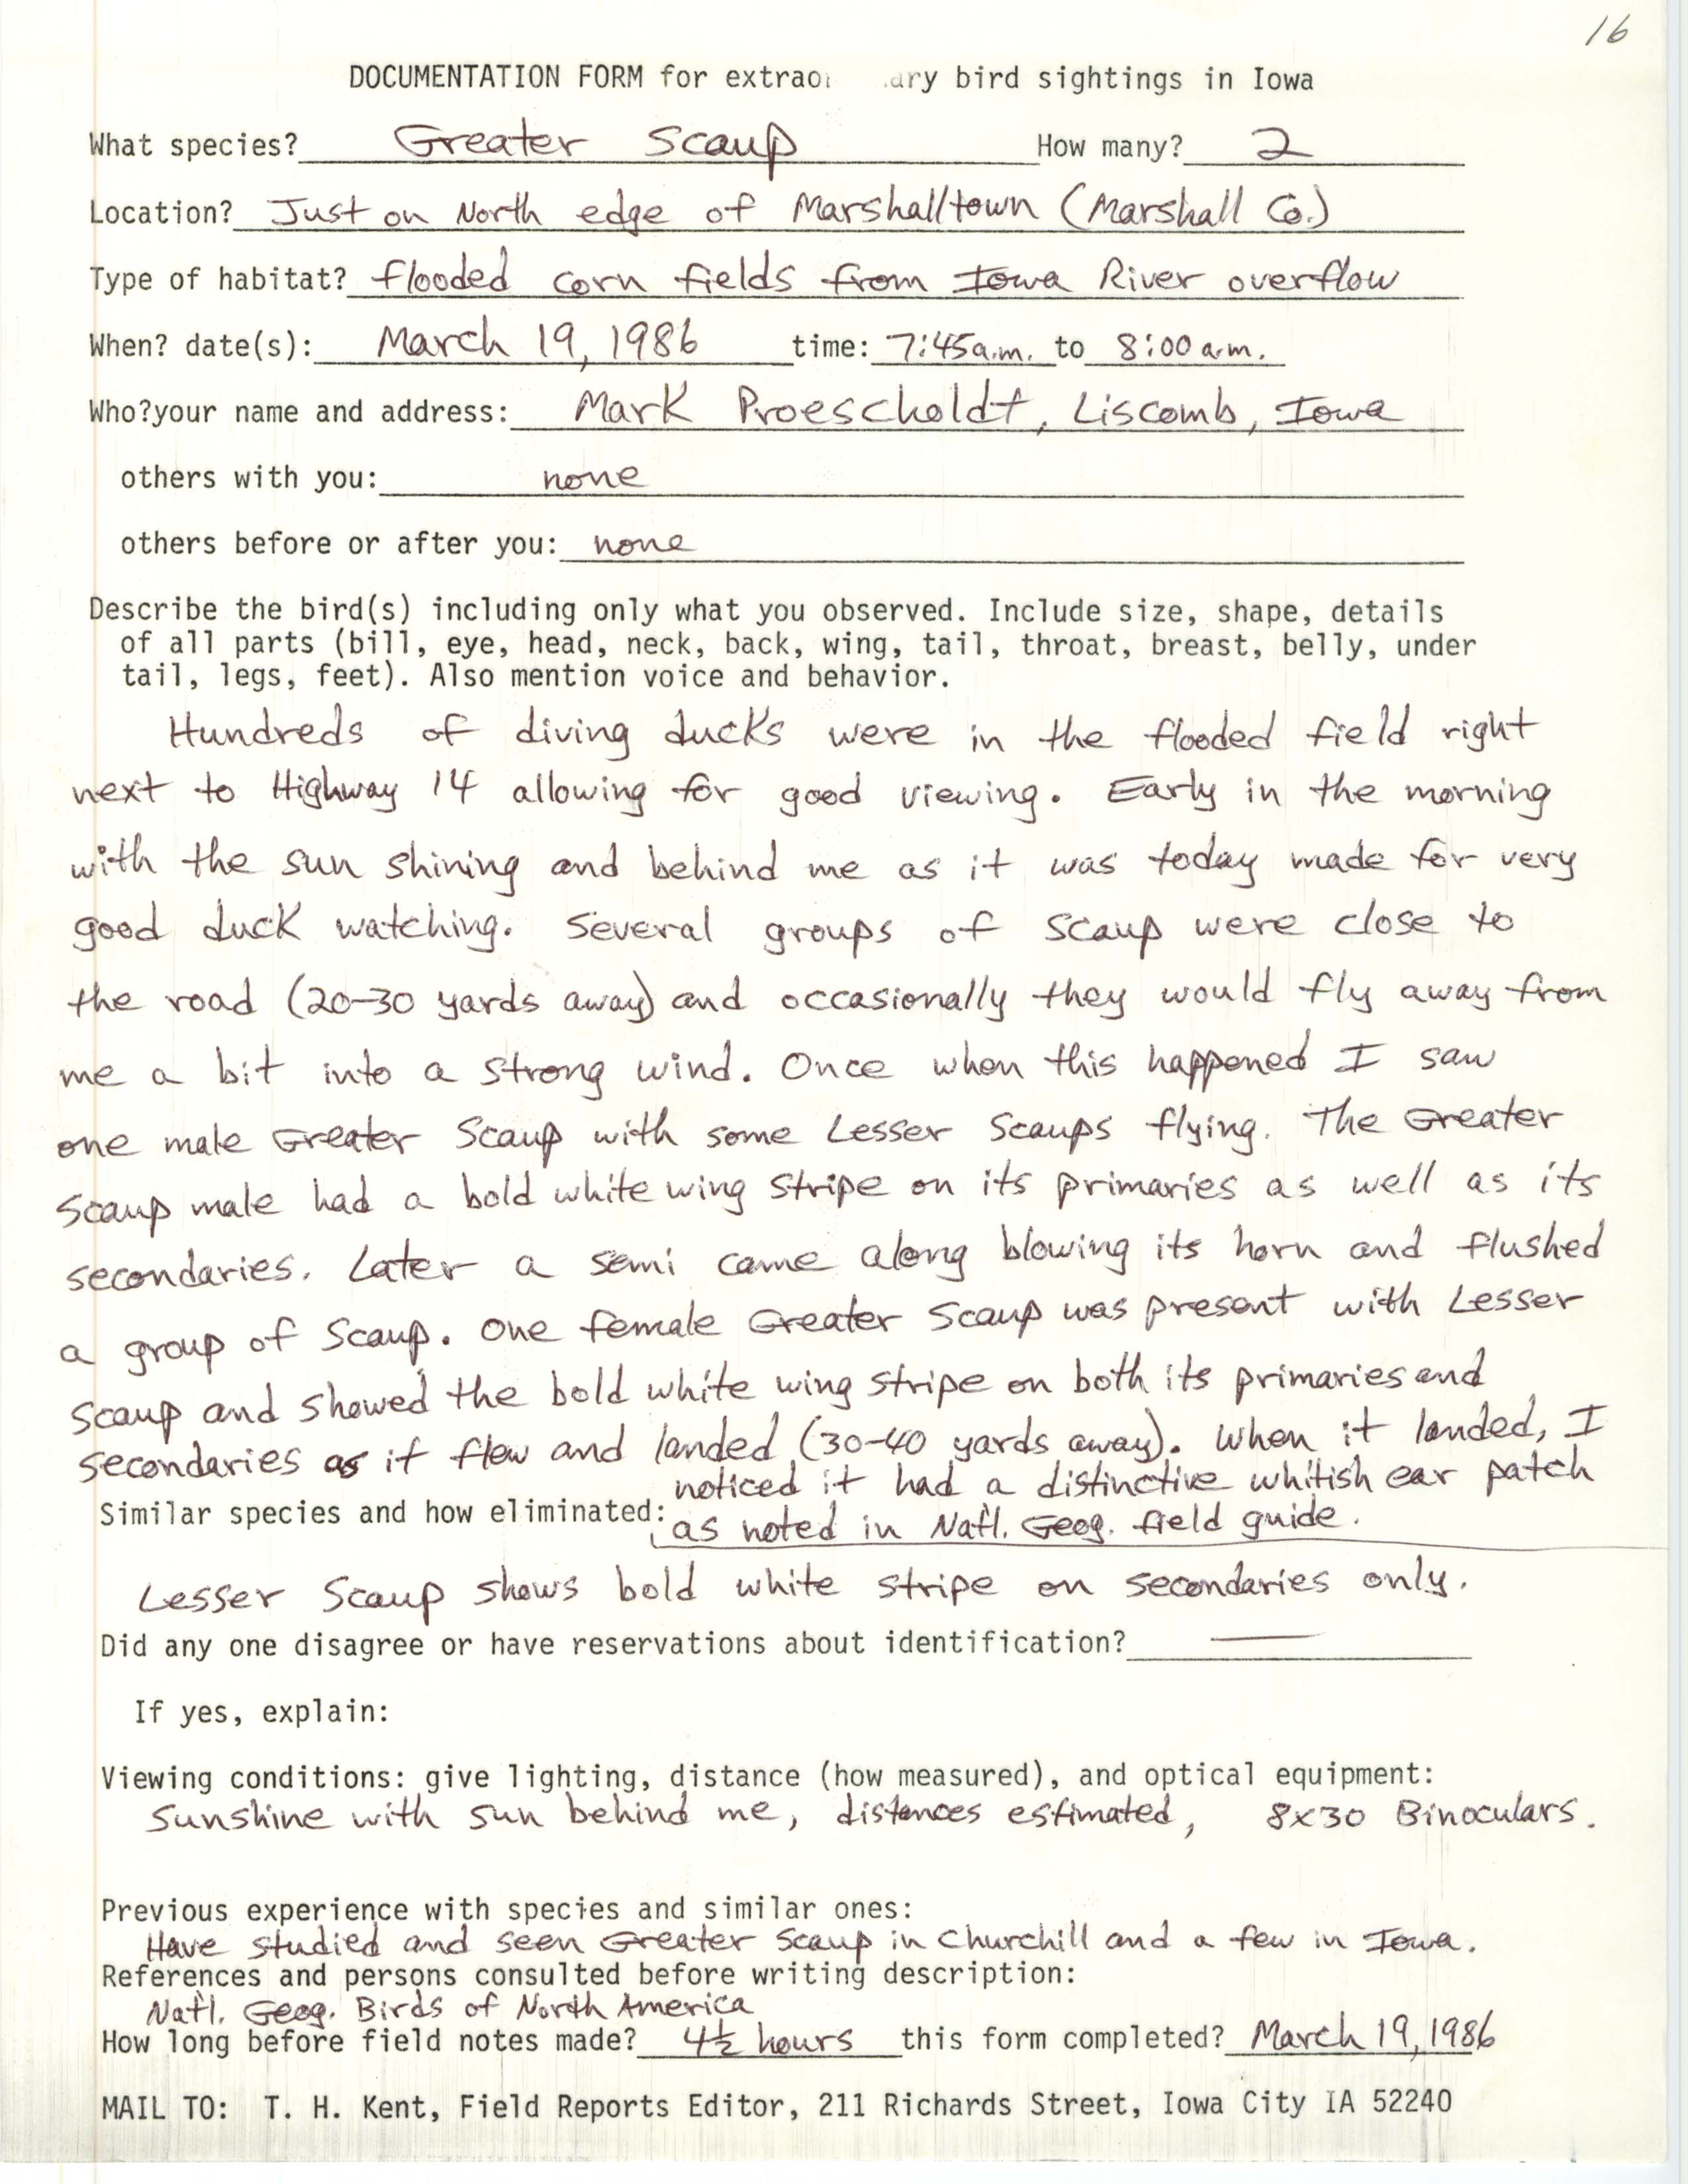 Rare bird documentation form for Greater Scaup at Marshalltown, 1986